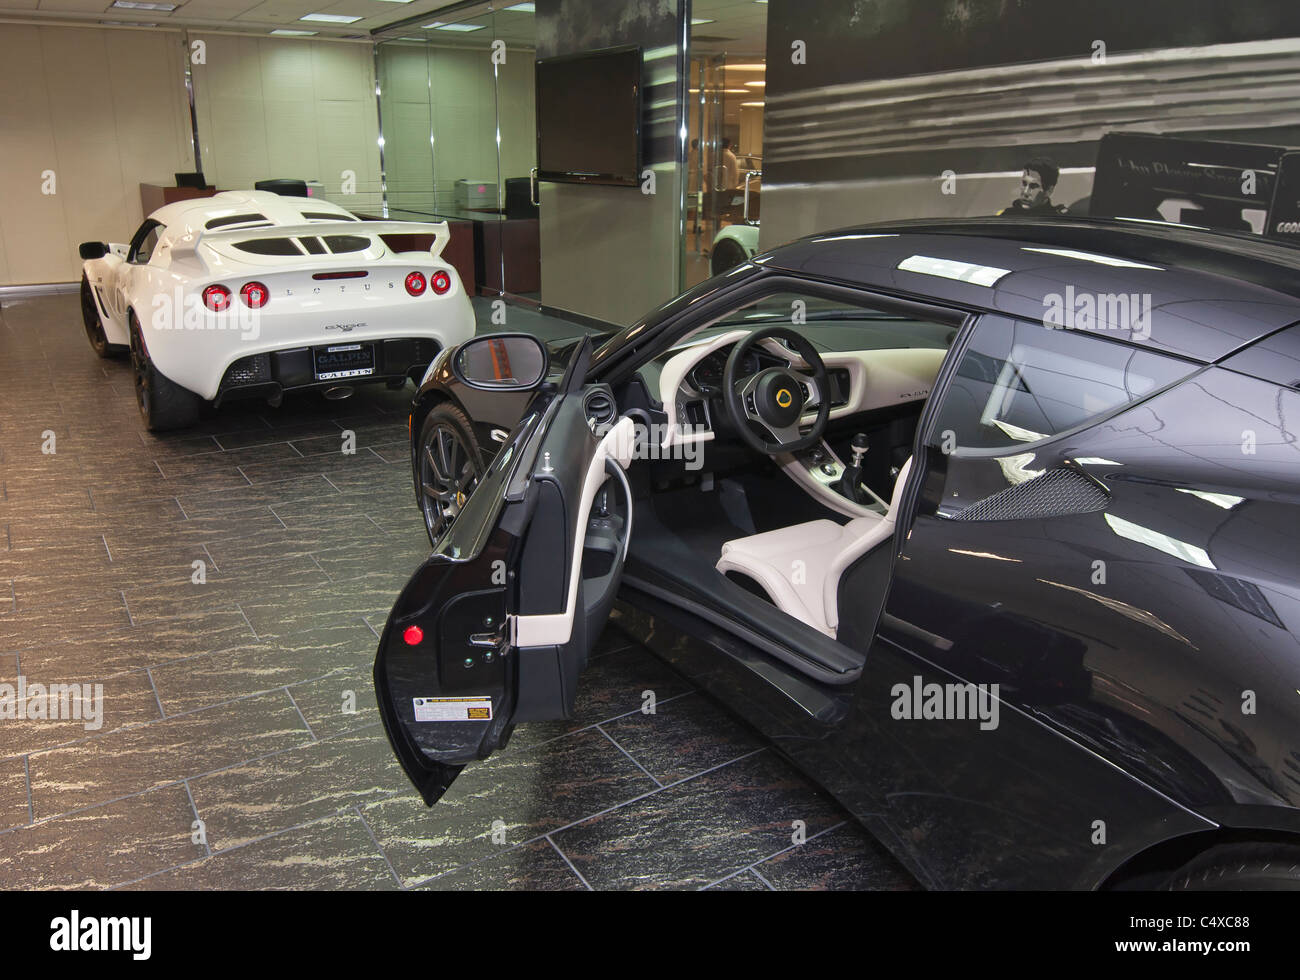 Galpin Motor's Club Aston Martin showroom. Stock Photo